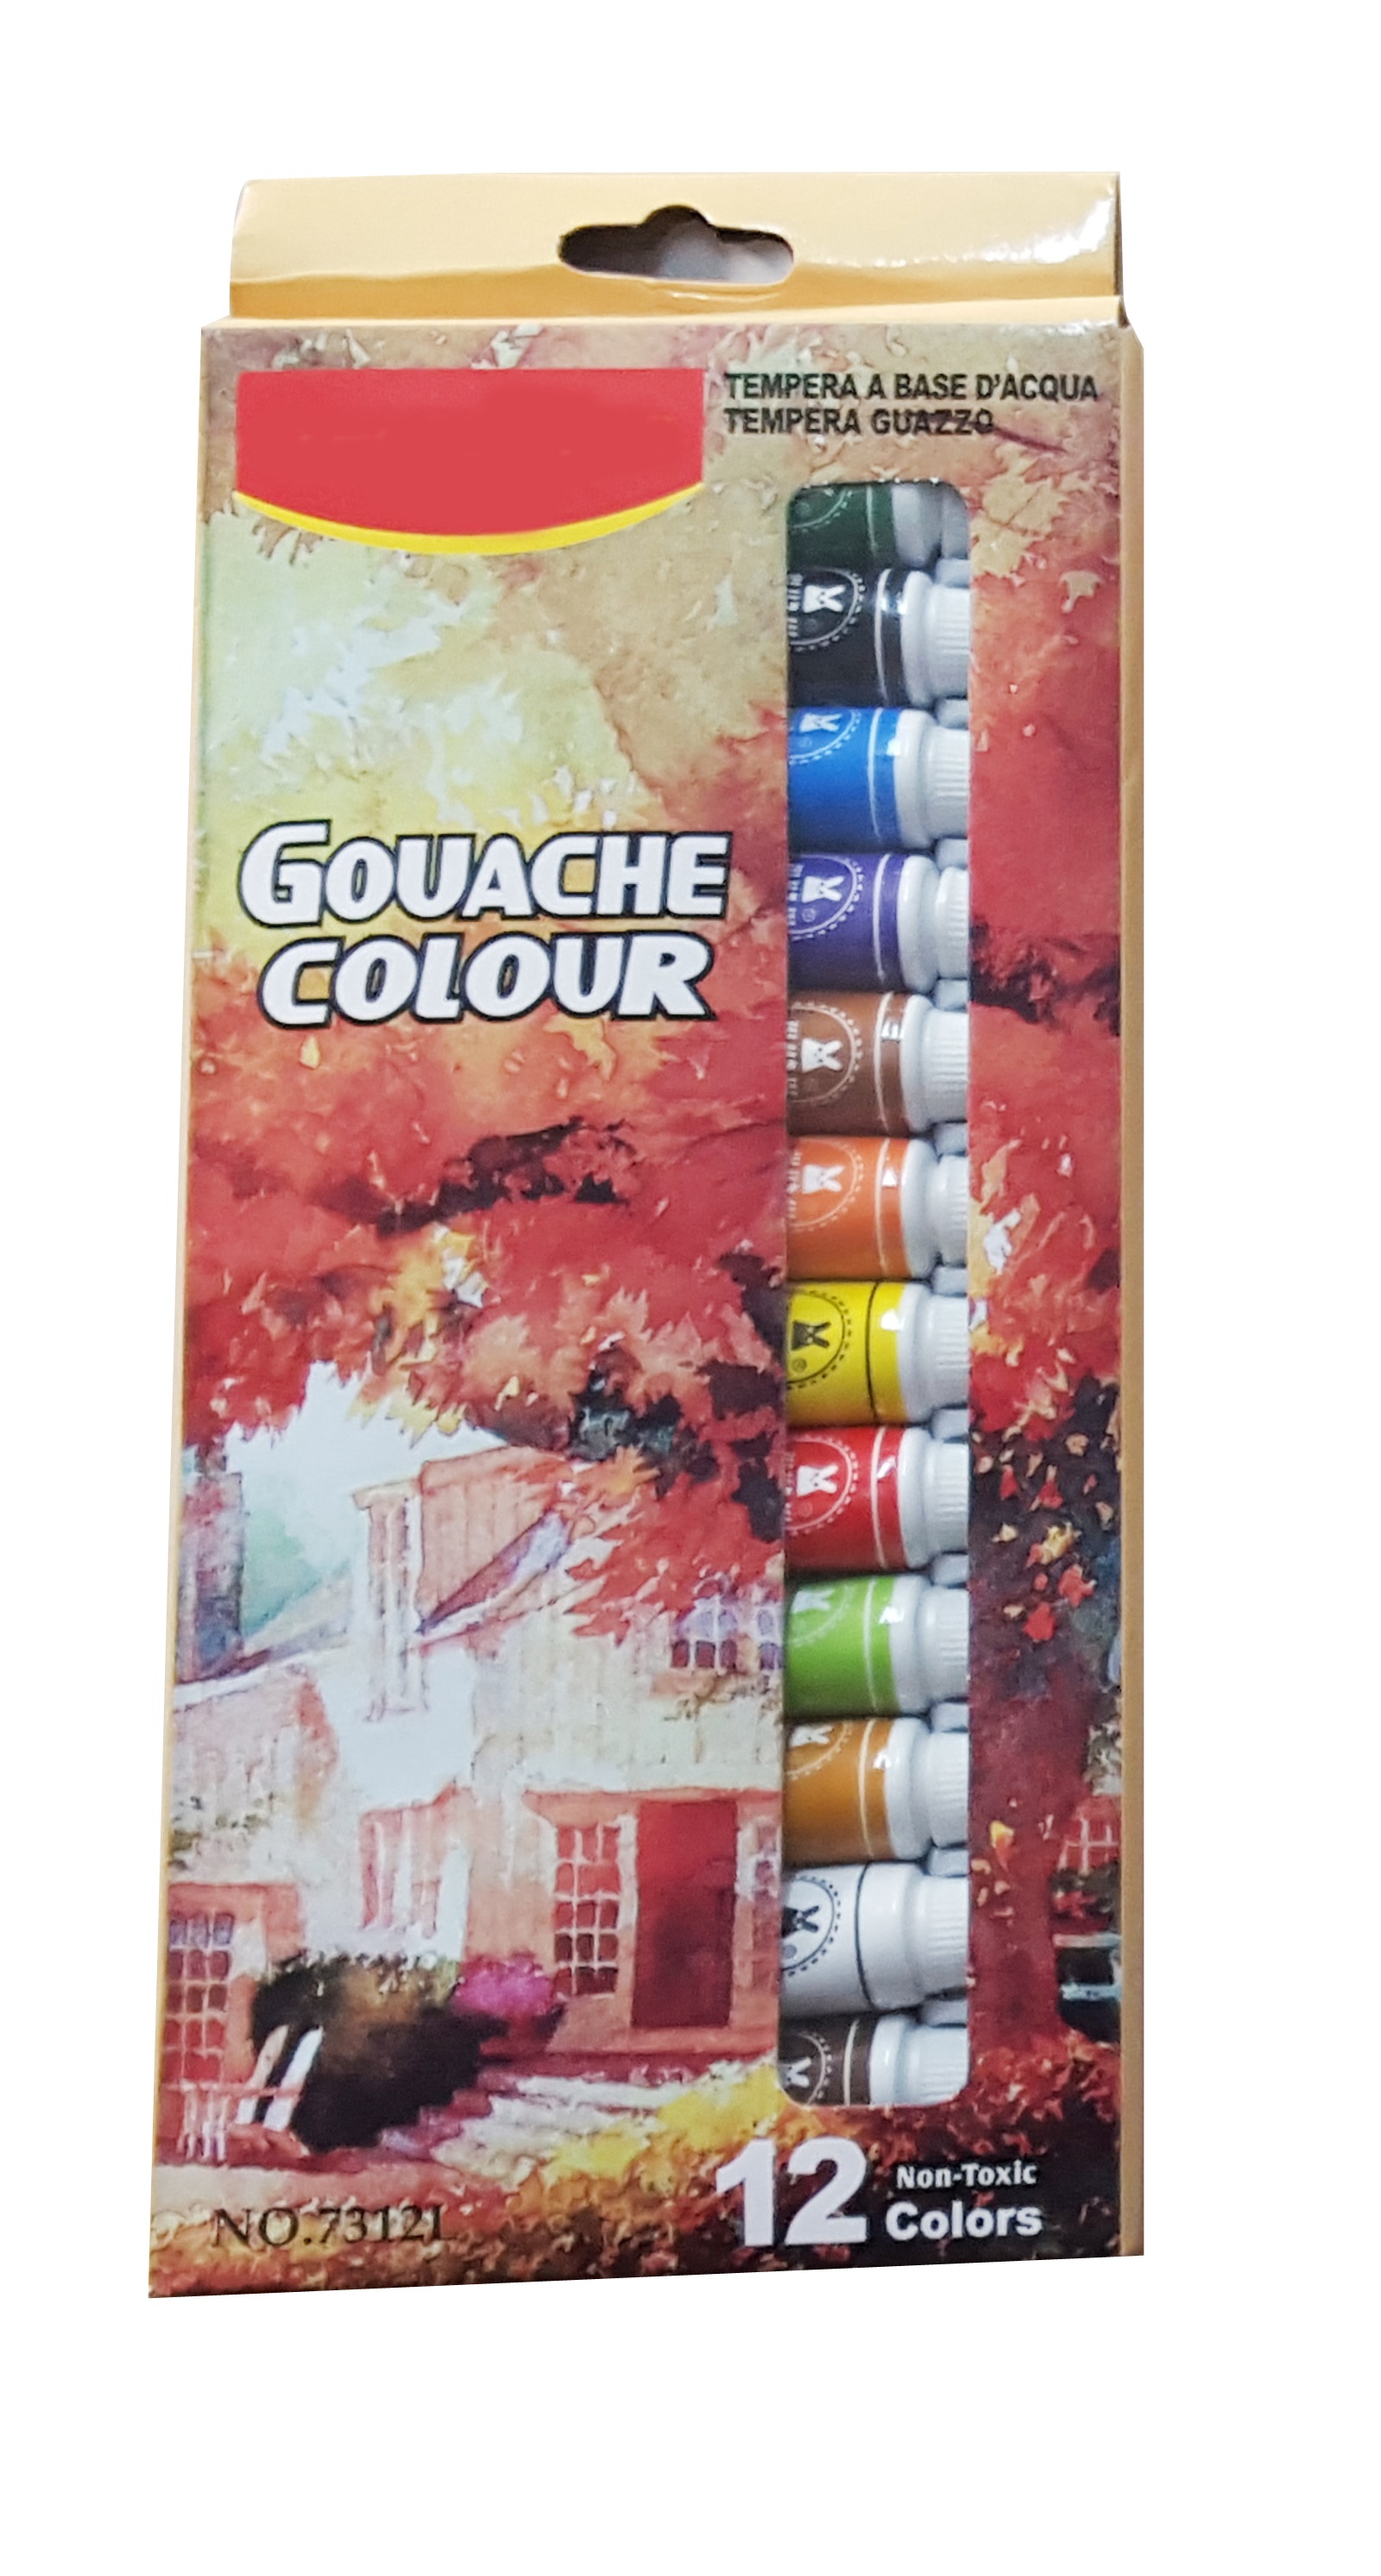 Acuarele guase, 12 culori, Guache Color rik.ro